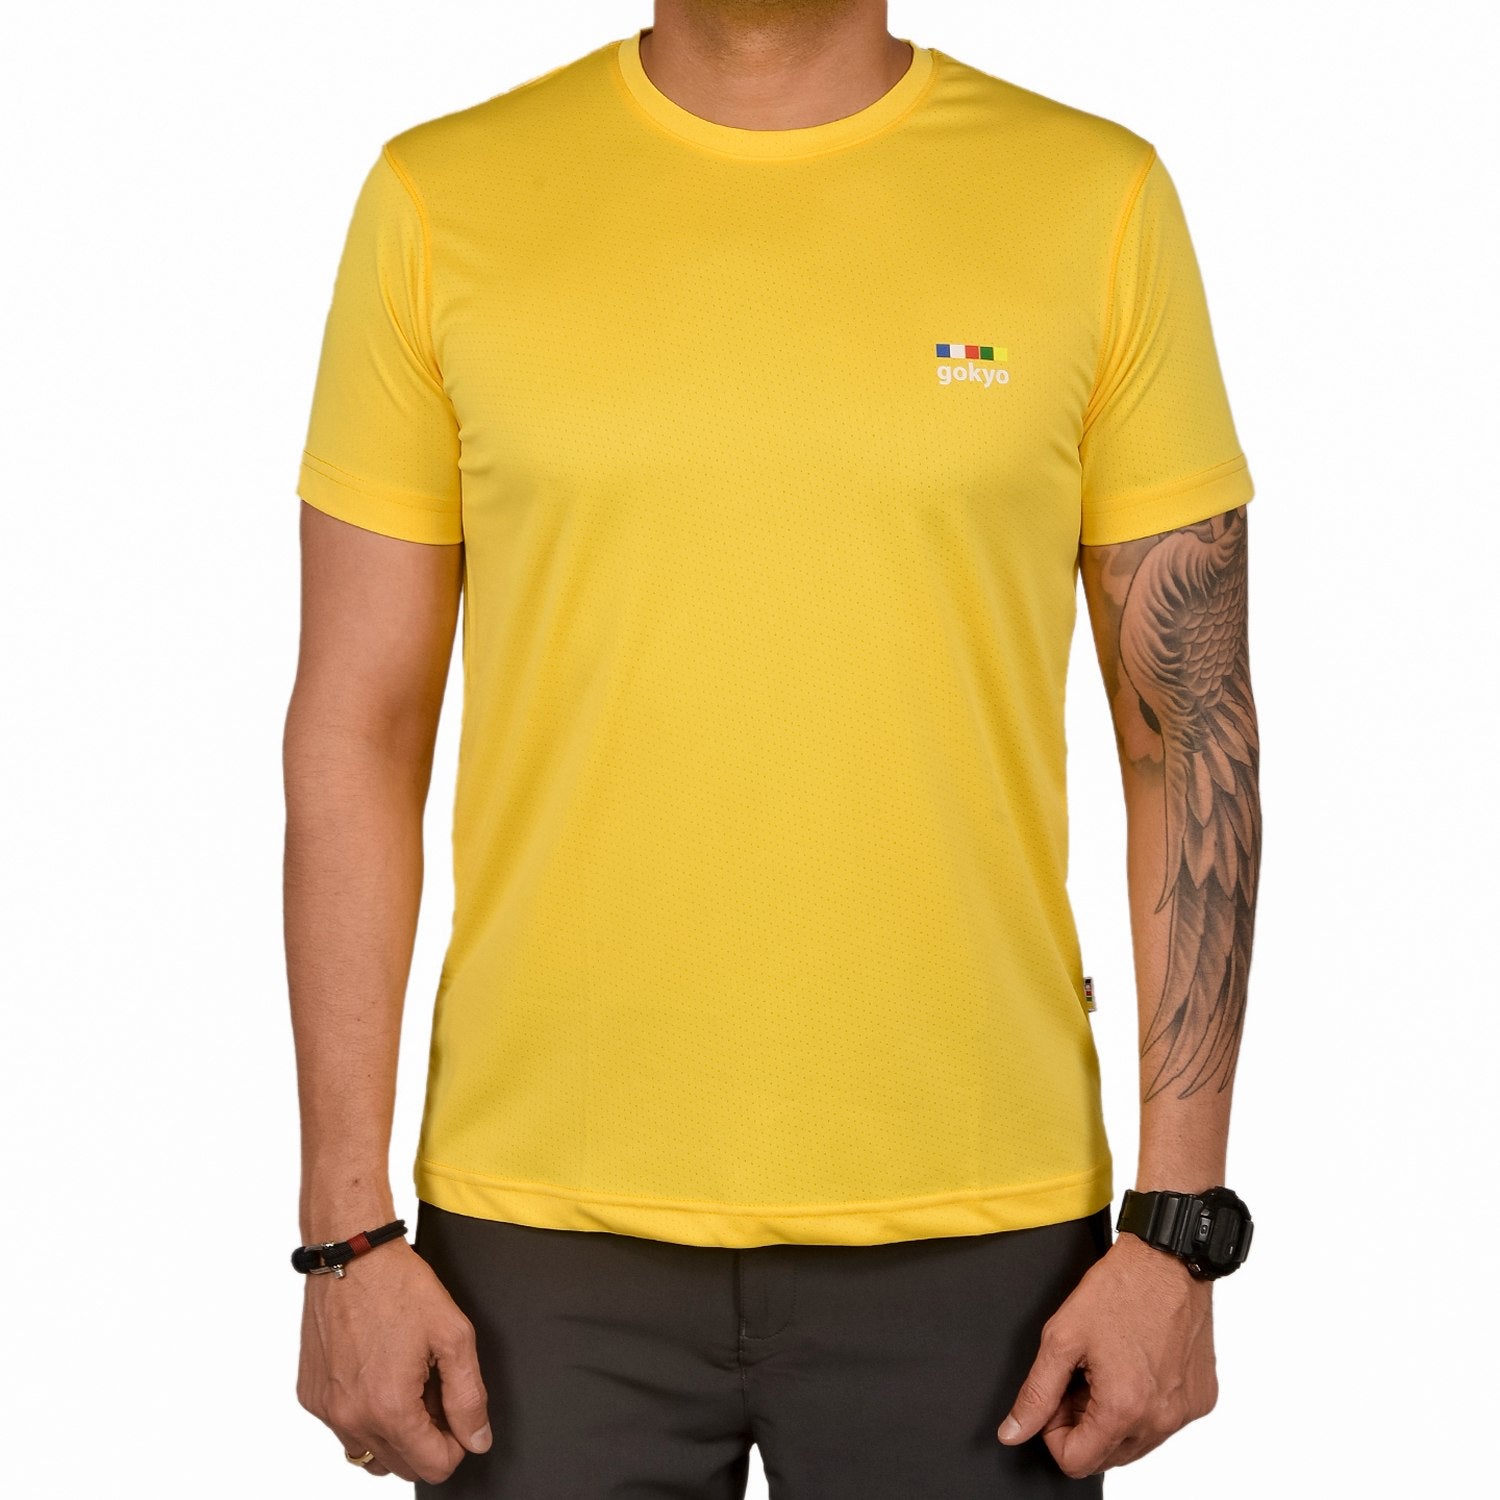 Buy Kalimpong Activewear DryFit Tshirt Lemon Yellow at Gokyo Outdoor Clothing & Gear